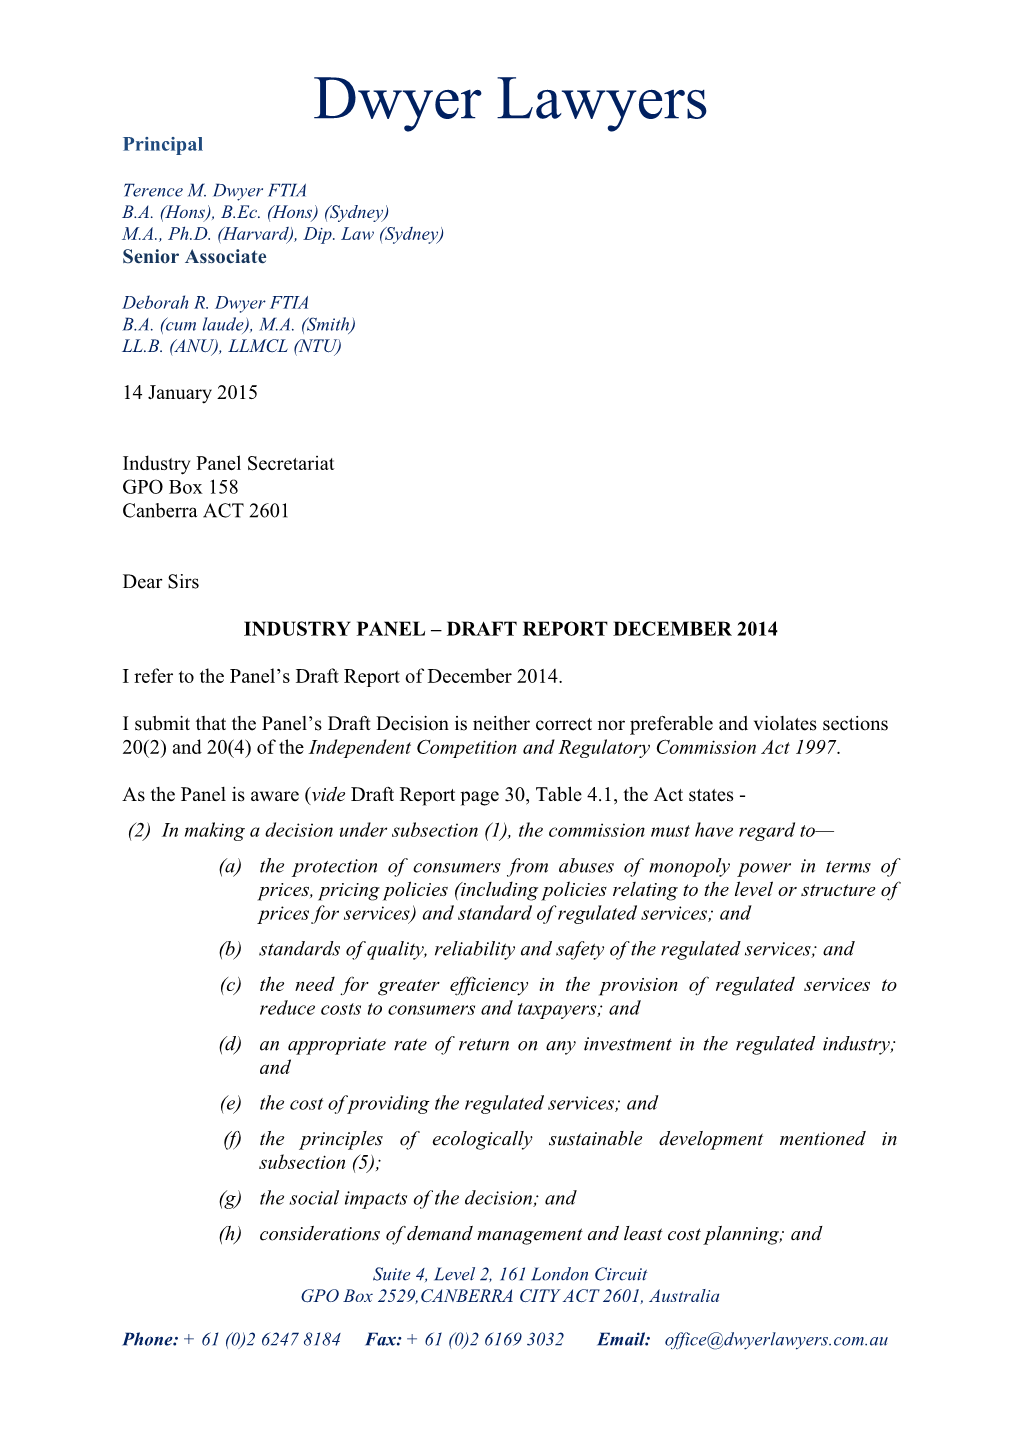 Industry Panel Draft Report December 2014